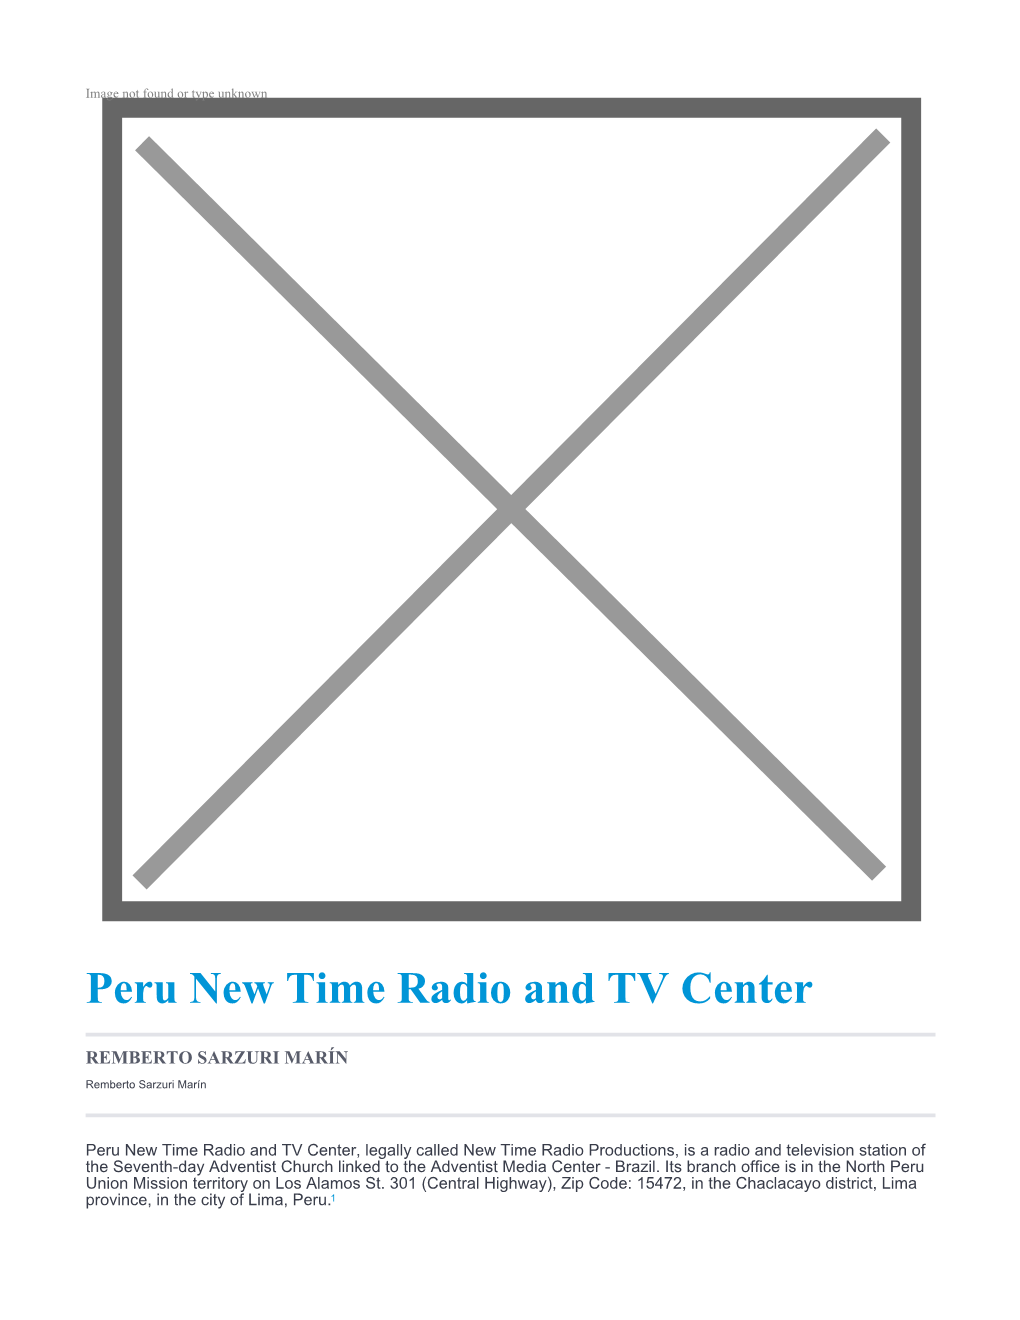 Peru New Time Radio and TV Center